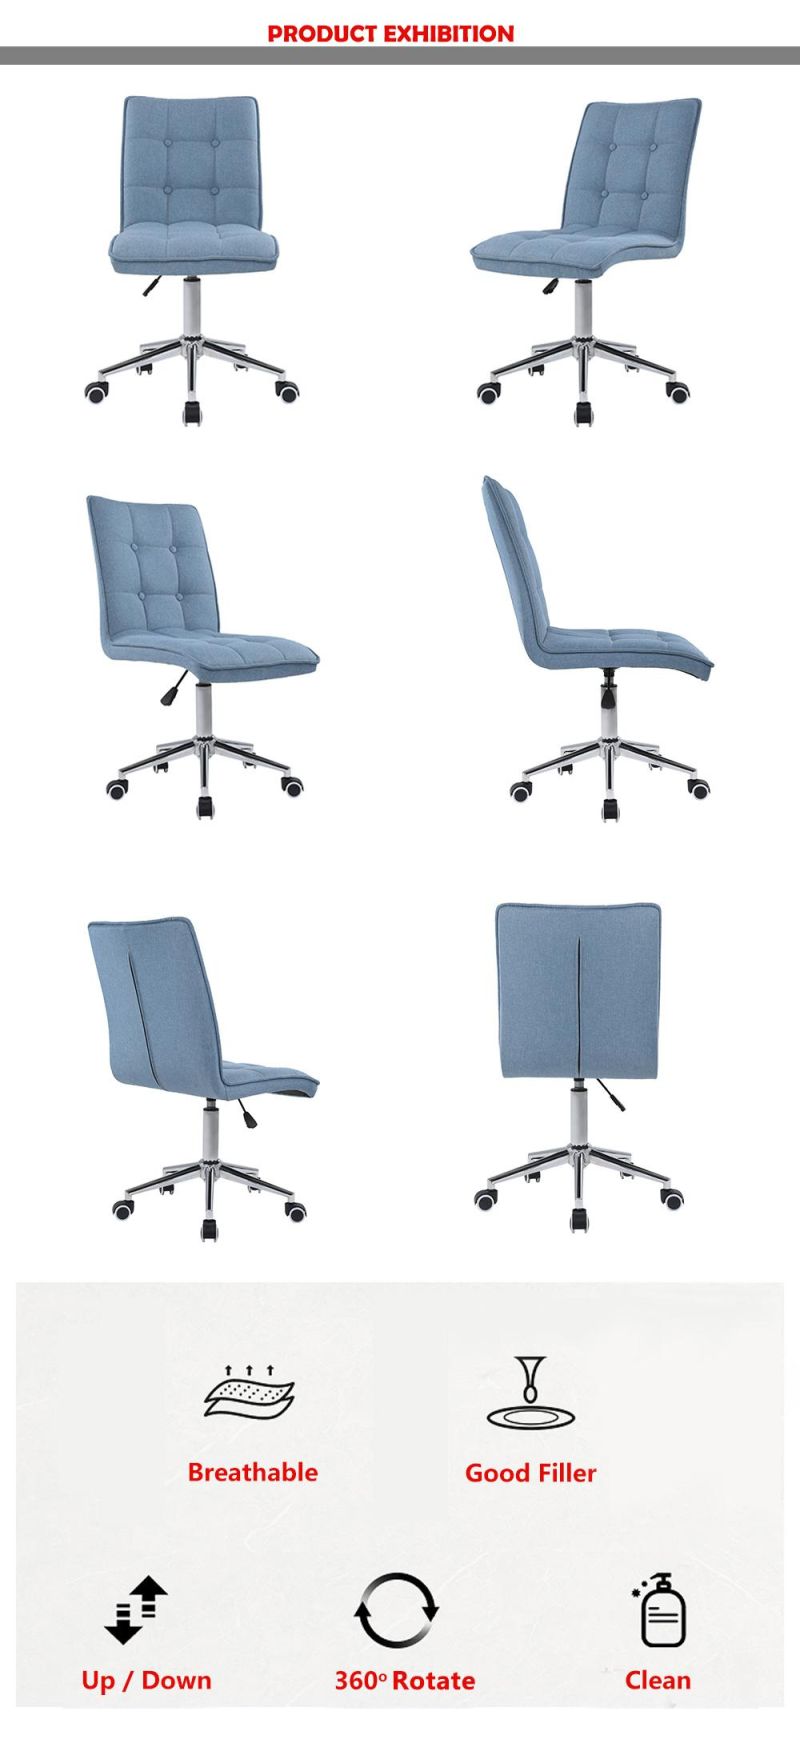 Wholesale High-Tech Comfortable Executive Swivel Ergonomic Office Chair